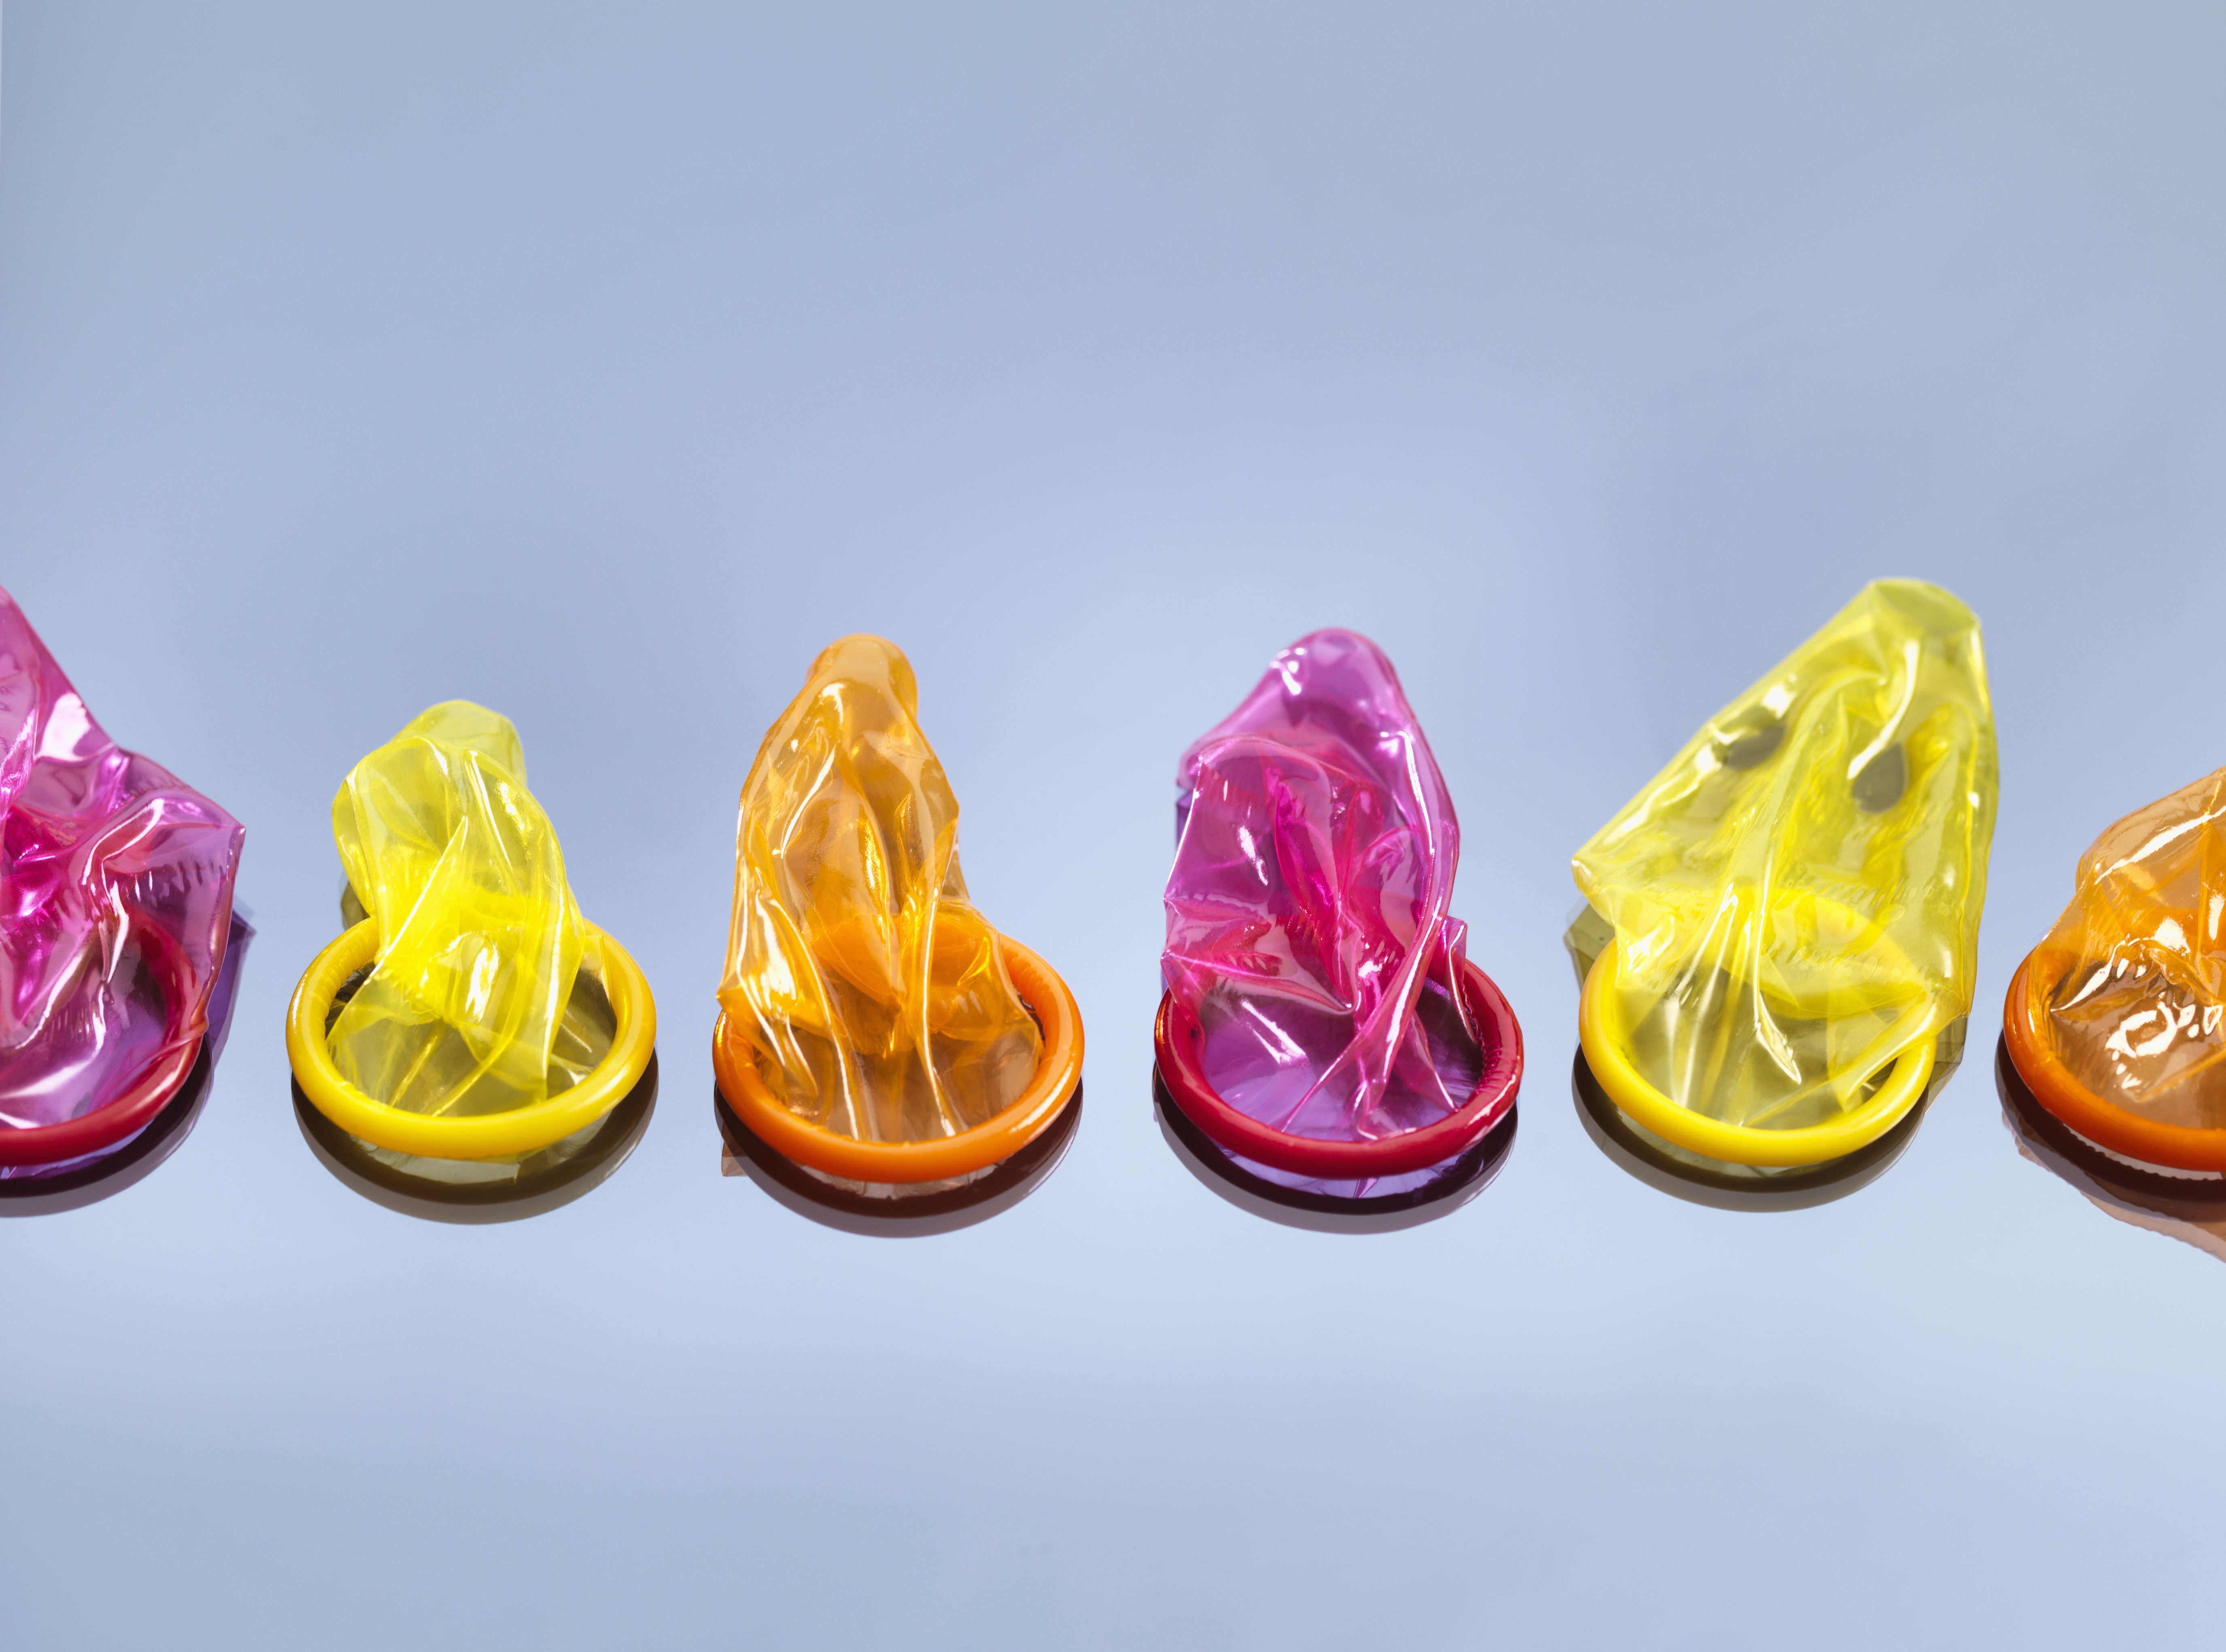 Size condoms snugger fit mobi.daystar.ac.ke: Lifestyles